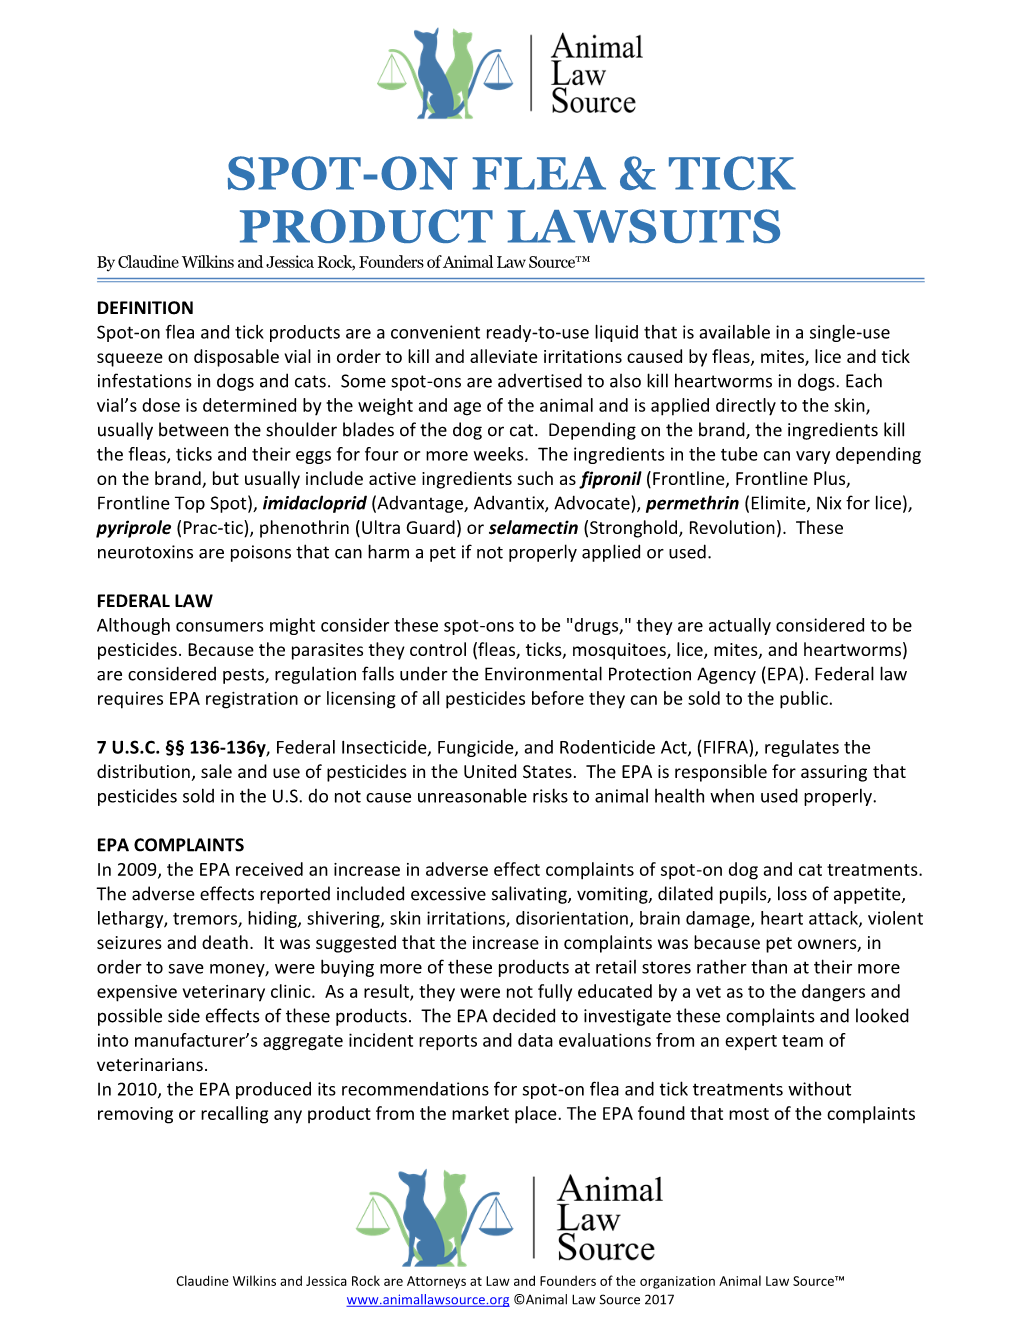 Spot-On Flea & Tick Product Lawsuits